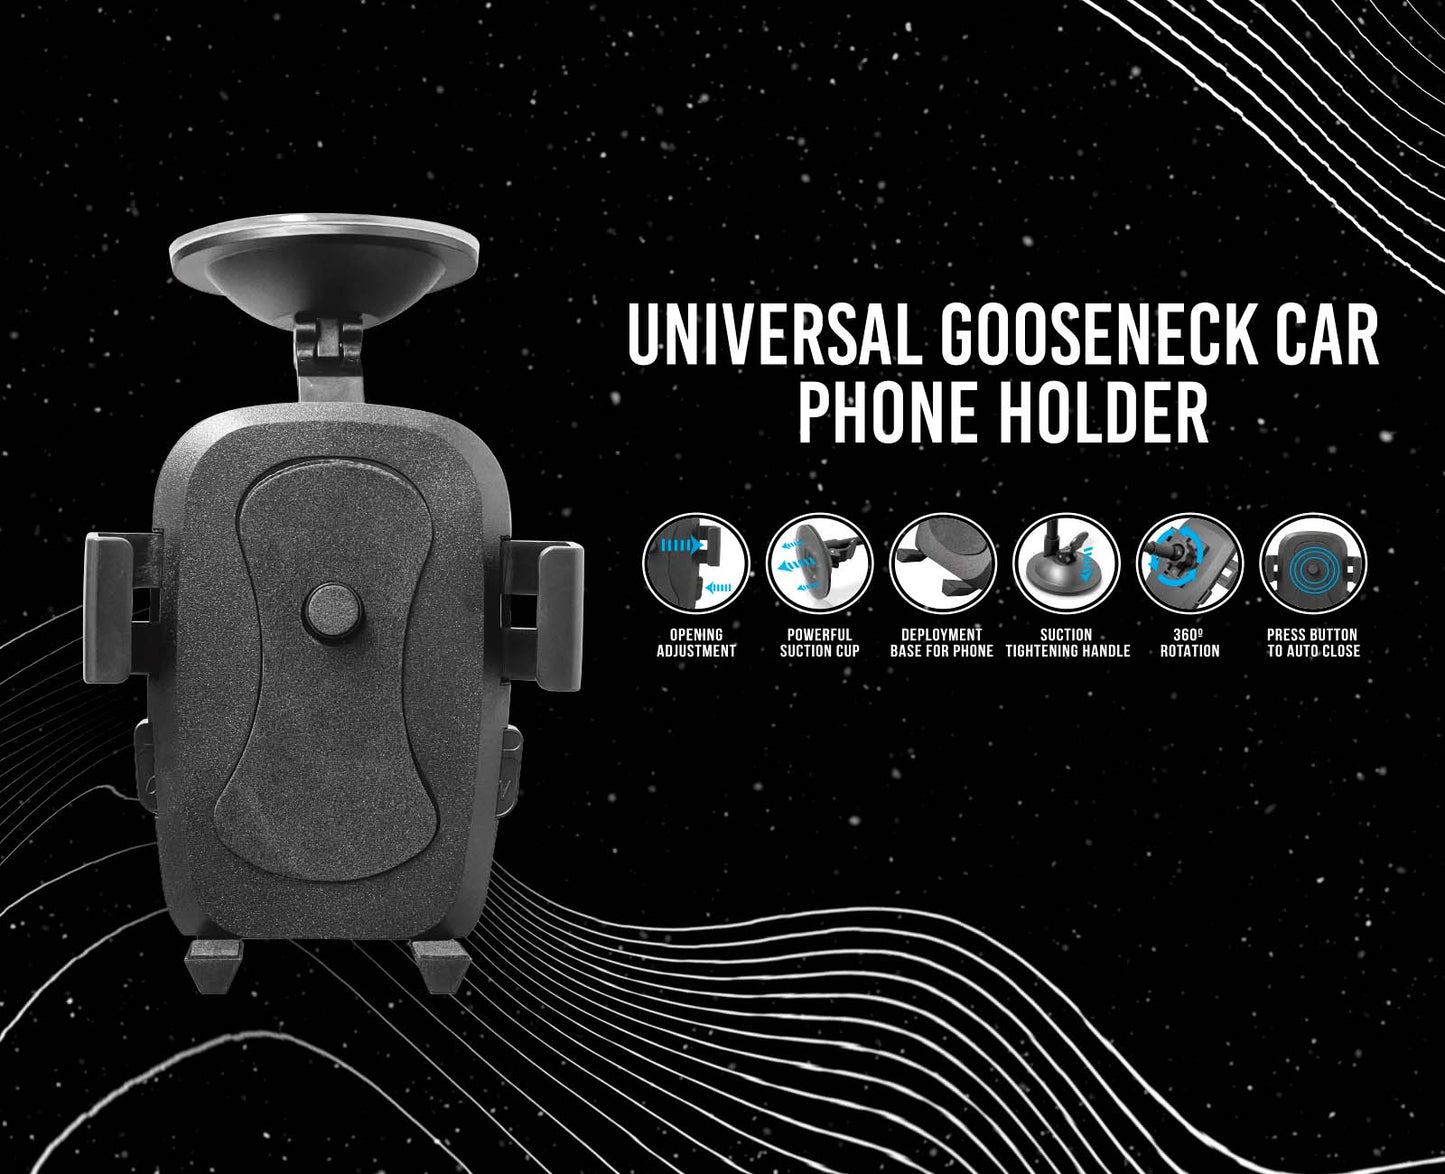 Universal Gooseneck Car Phone Holder